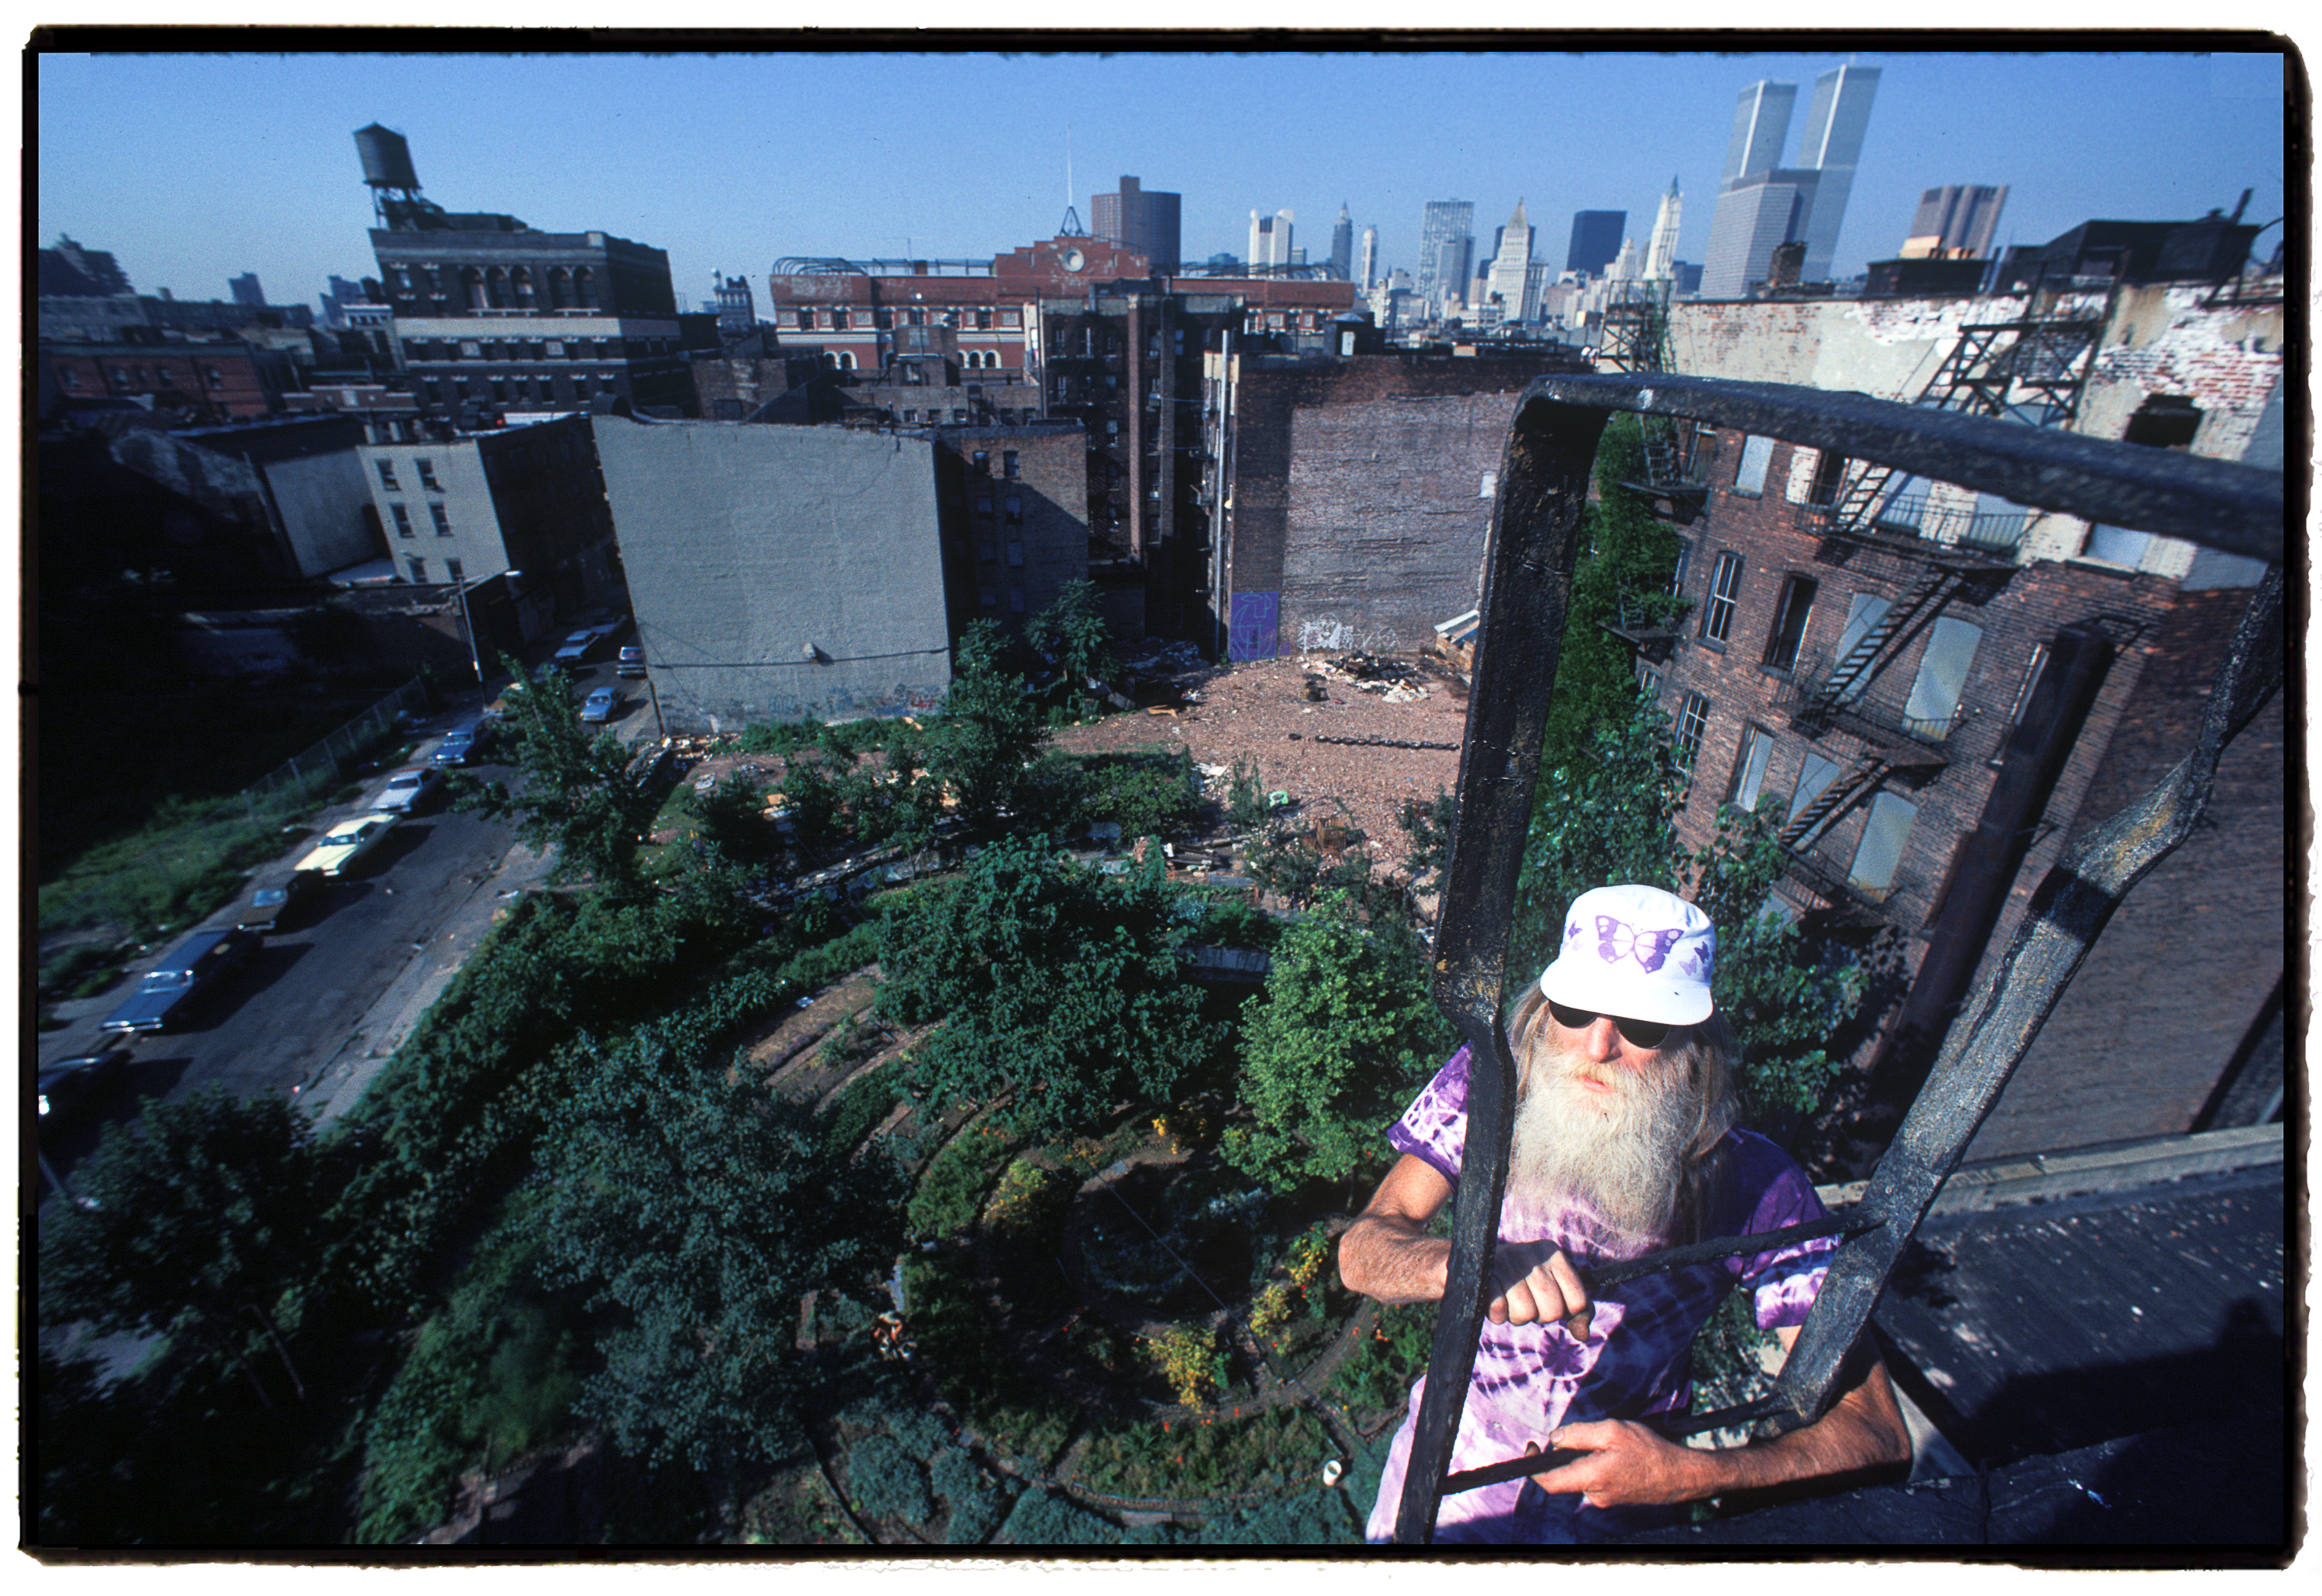 Above, Adam Purple overlooking his Garden of Eden on Forsyth St. Photograph copyright Harvey Wang